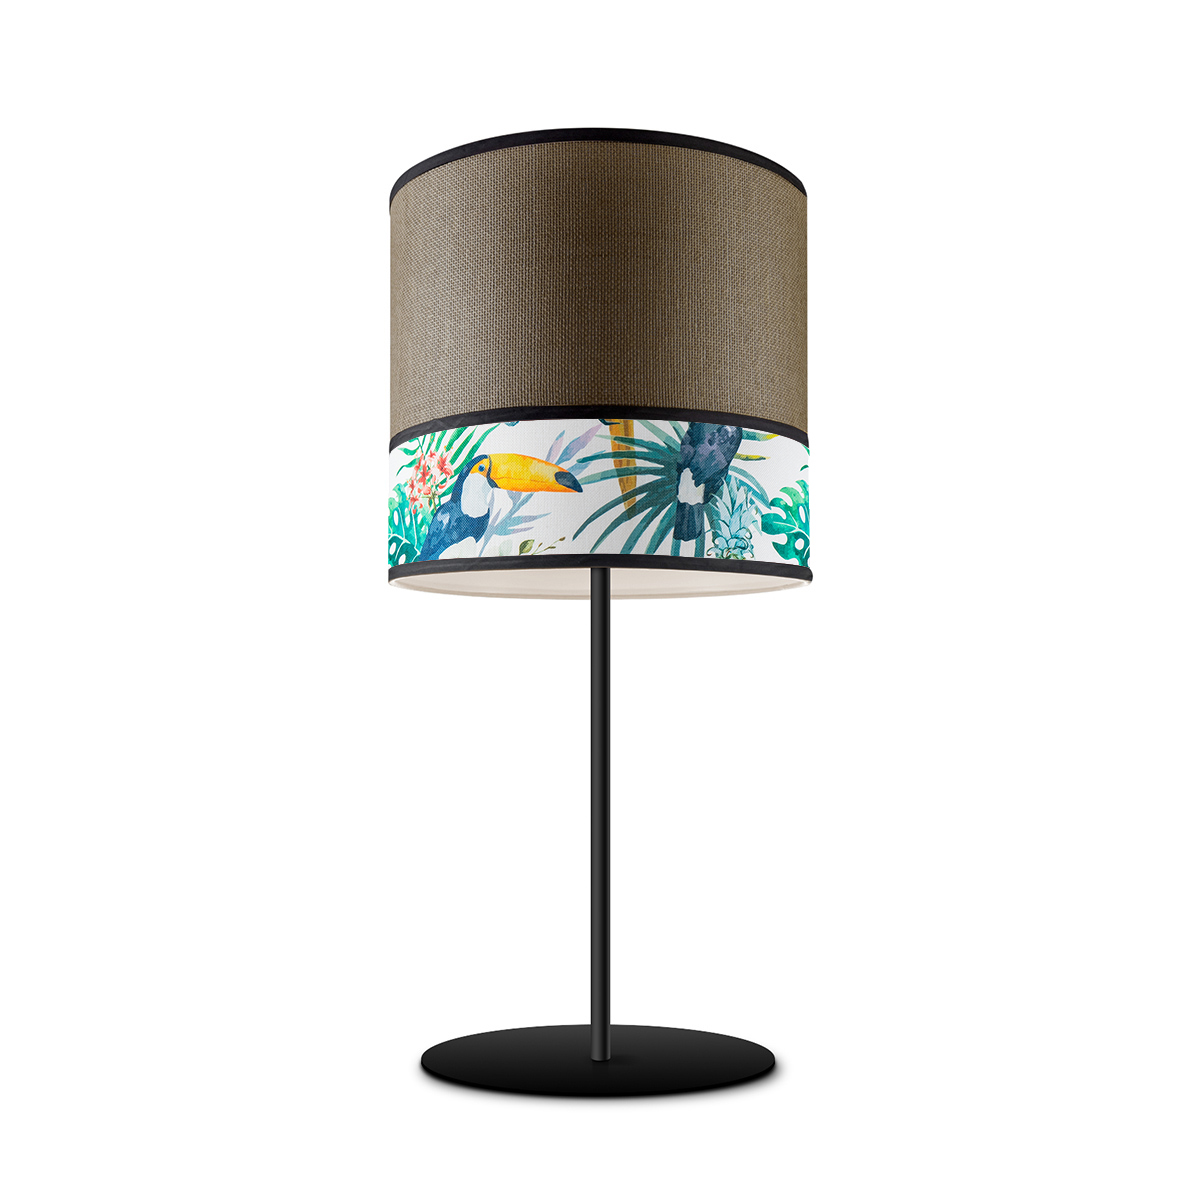 Tangla lighting - TLT7012-25C - Table lamp 1 Light - metal + paper + TC fabric - spring - dark bird - E27